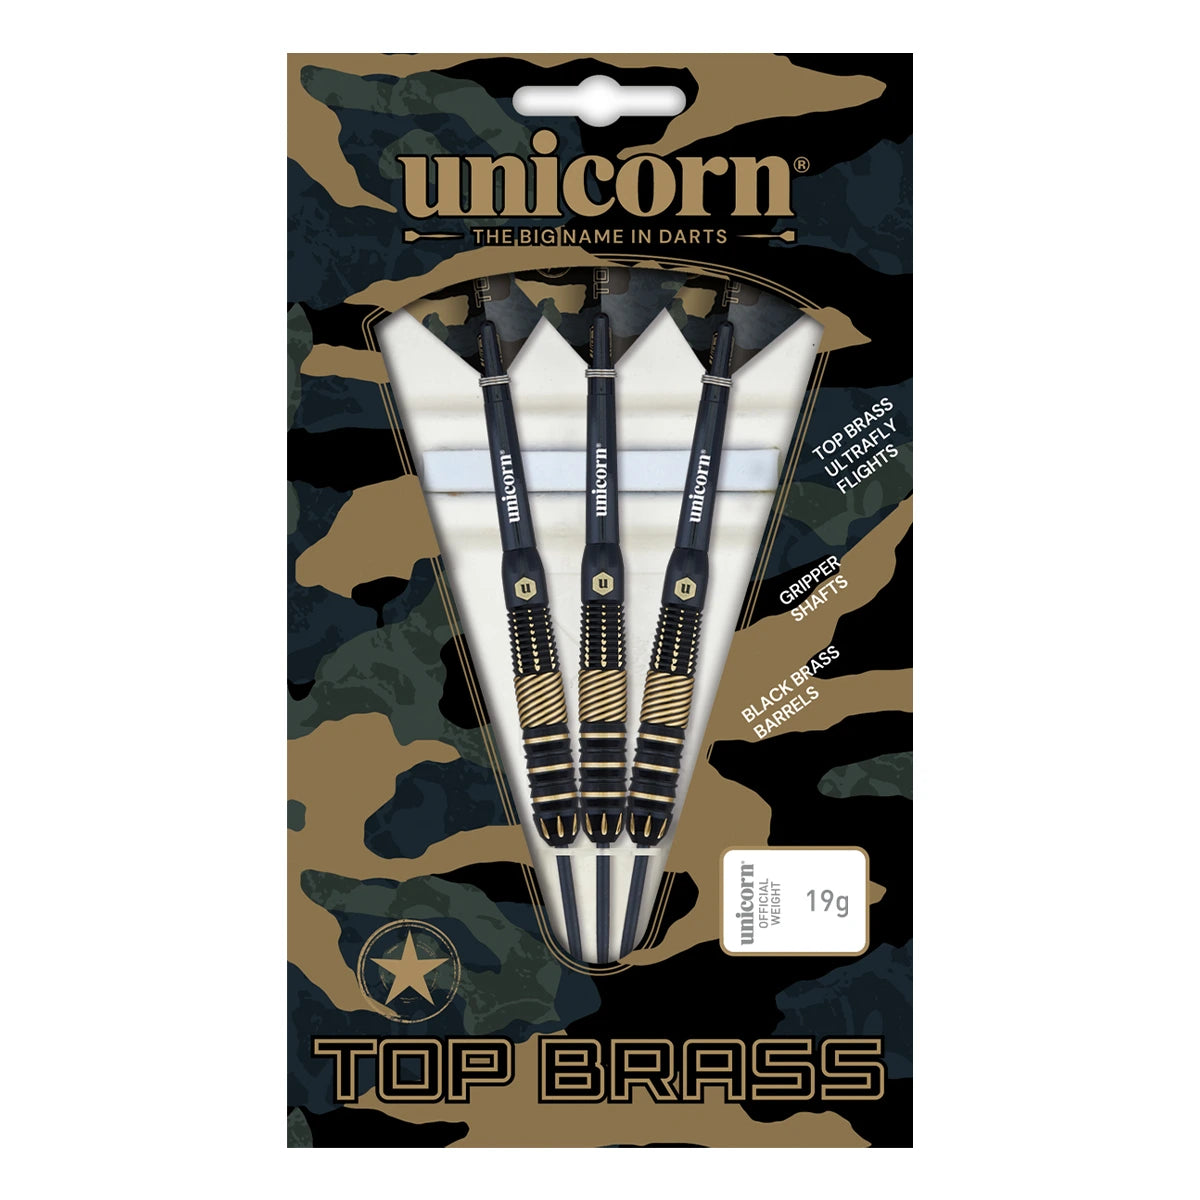 Unicorn Top Brass 19g Darts